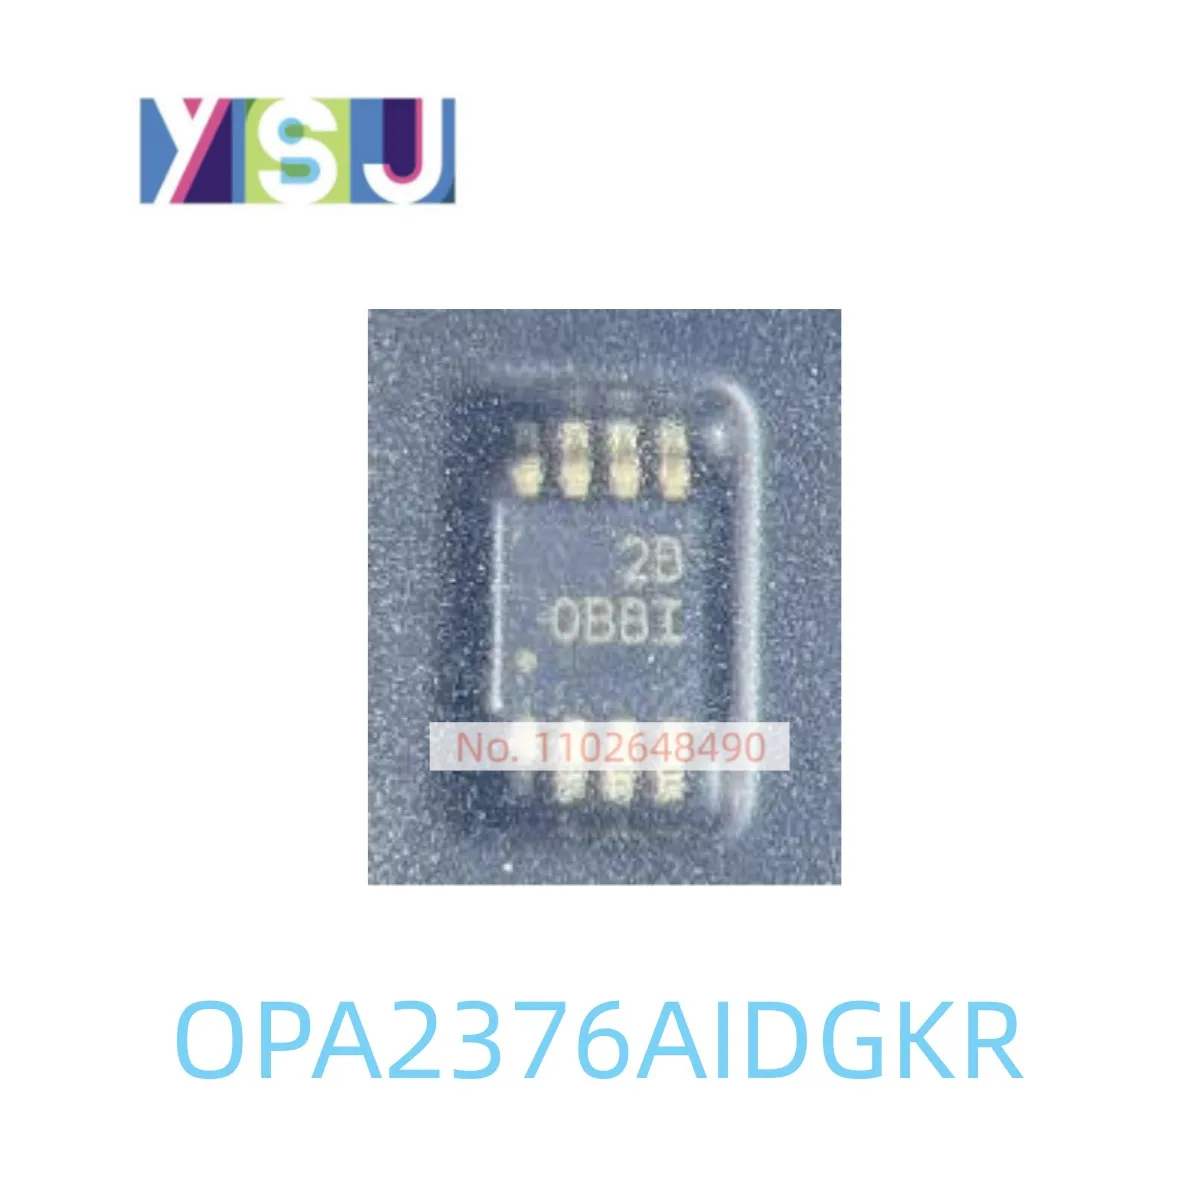 

OPA2376AIDGKR IC Brand New Microcontroller EncapsulationMSOP-8